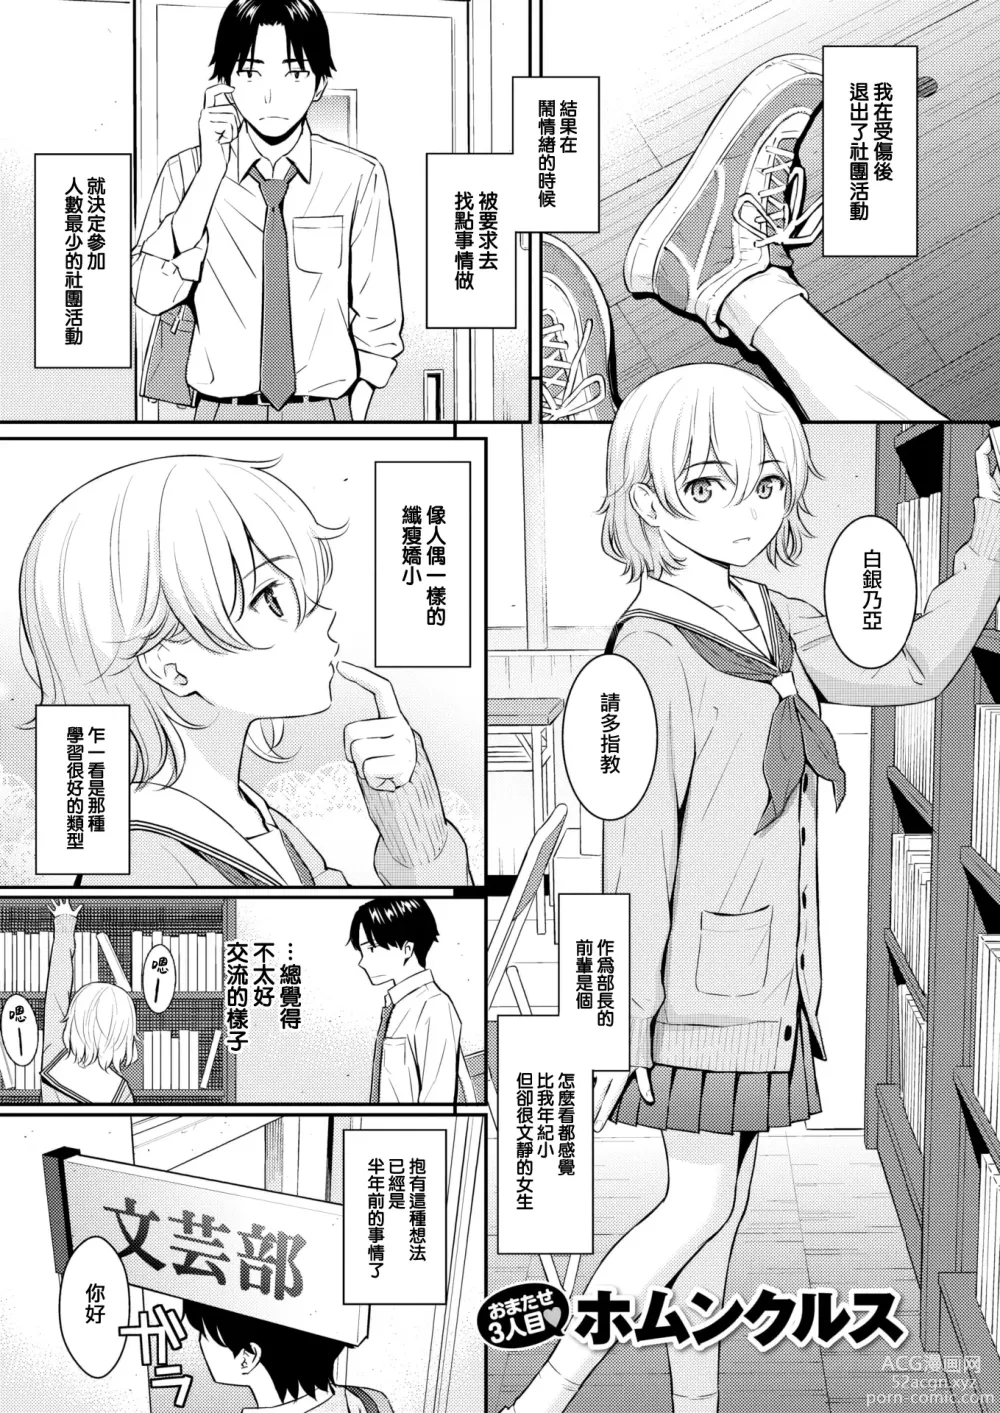 Page 4 of manga Pure White